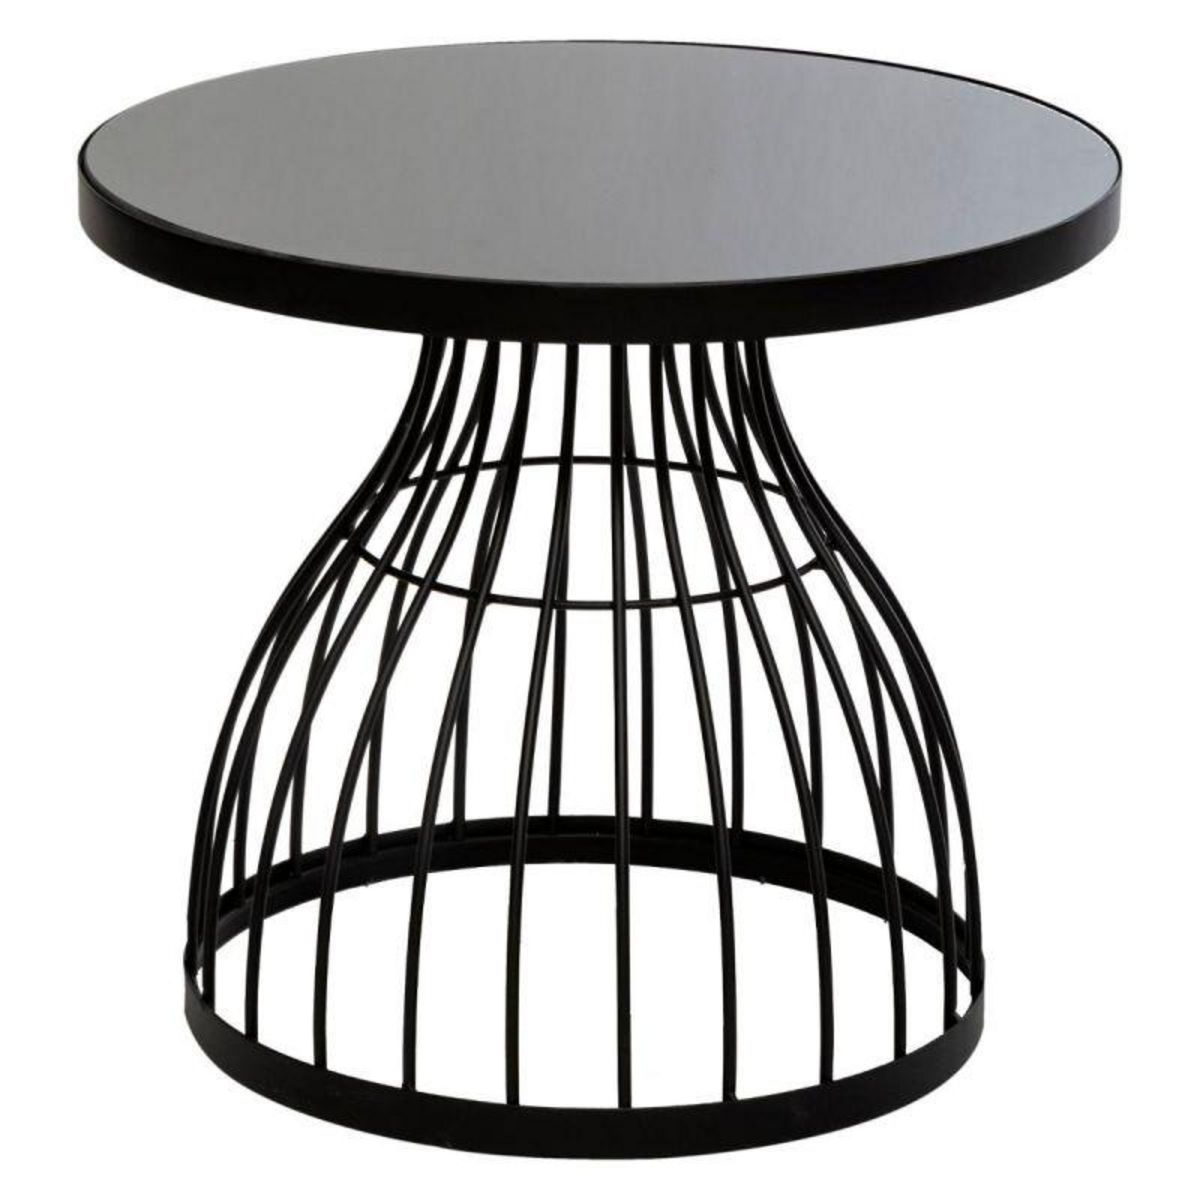  Table d'Appoint Design en Verre  Kushi  55cm Noir